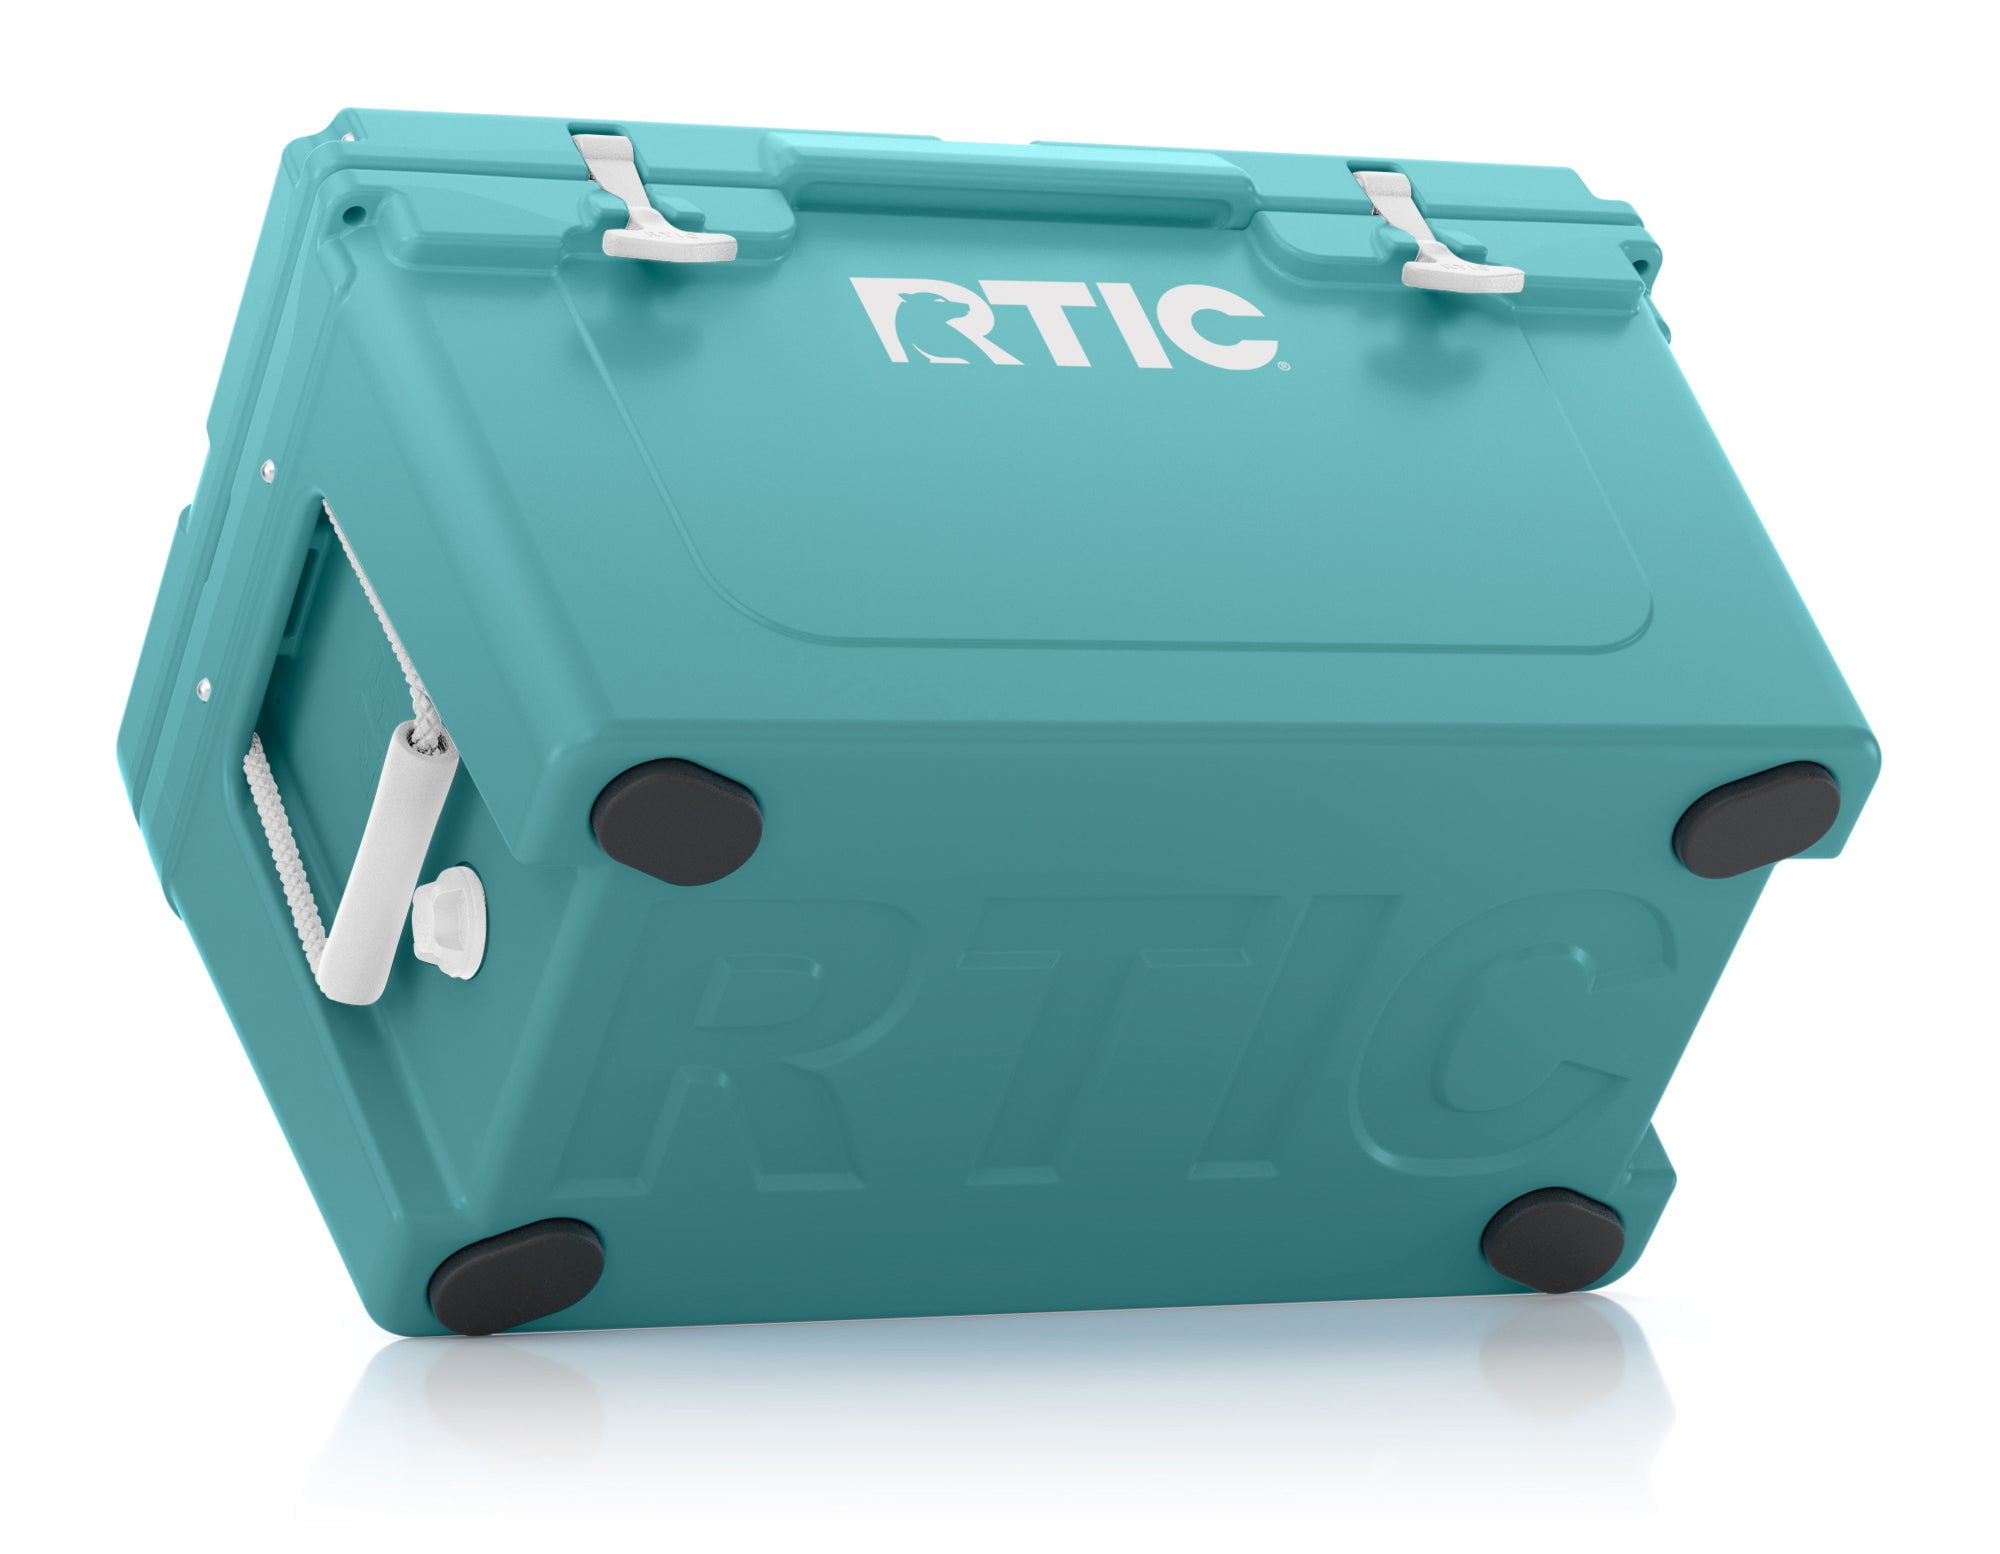 RTIC 110 QT Hard Coolers - Ice Chest